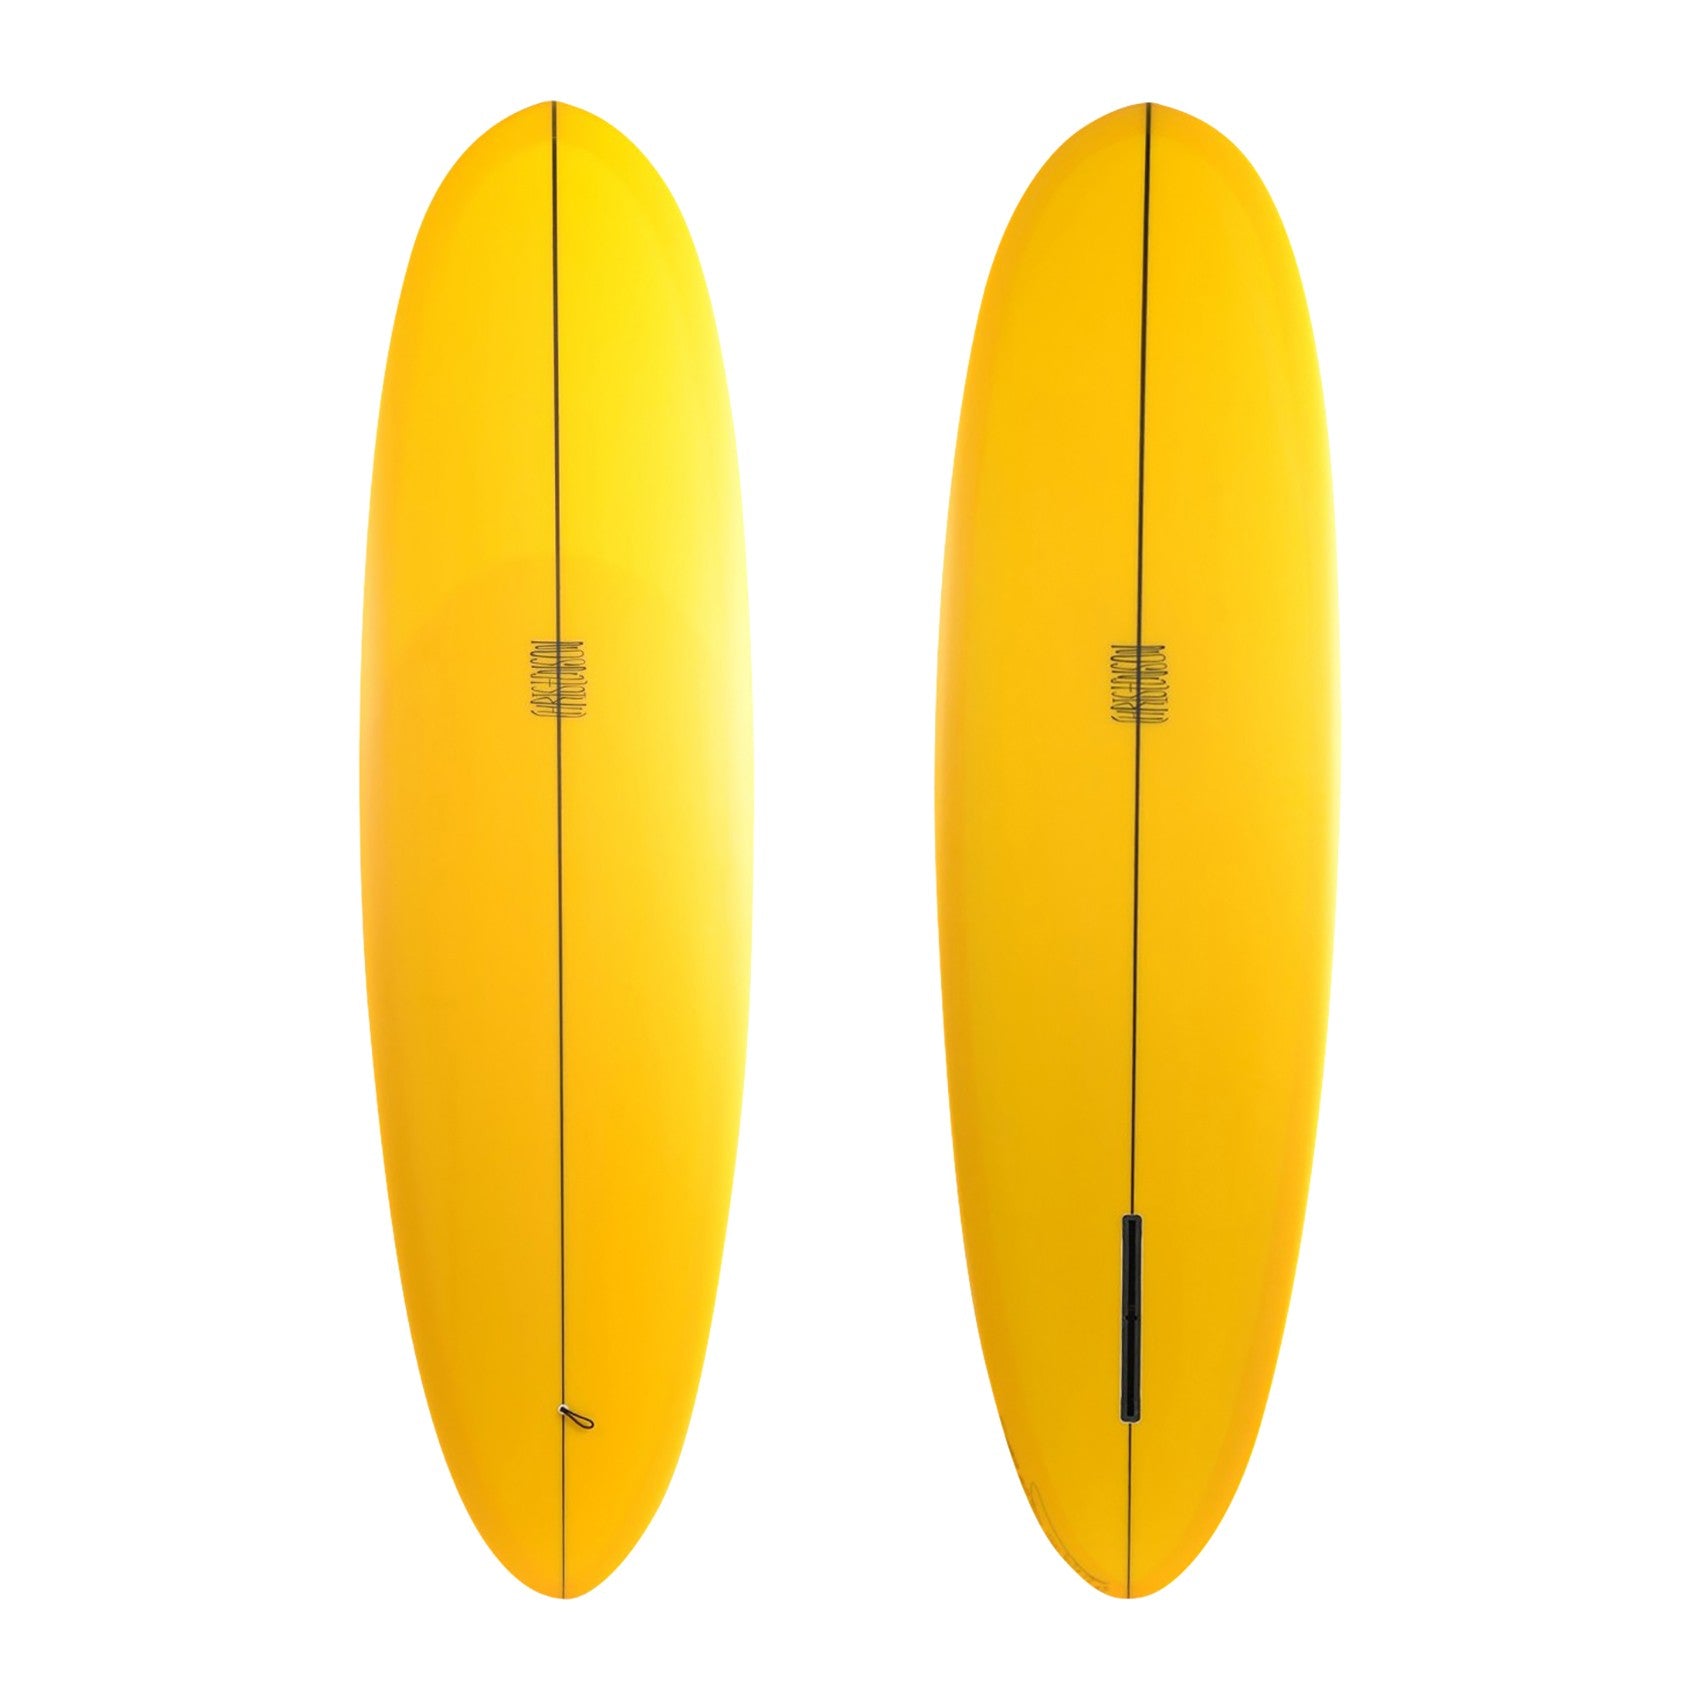 CHRISTENSON Surfboards - Sub Mariner 6'6 yellow (PU)